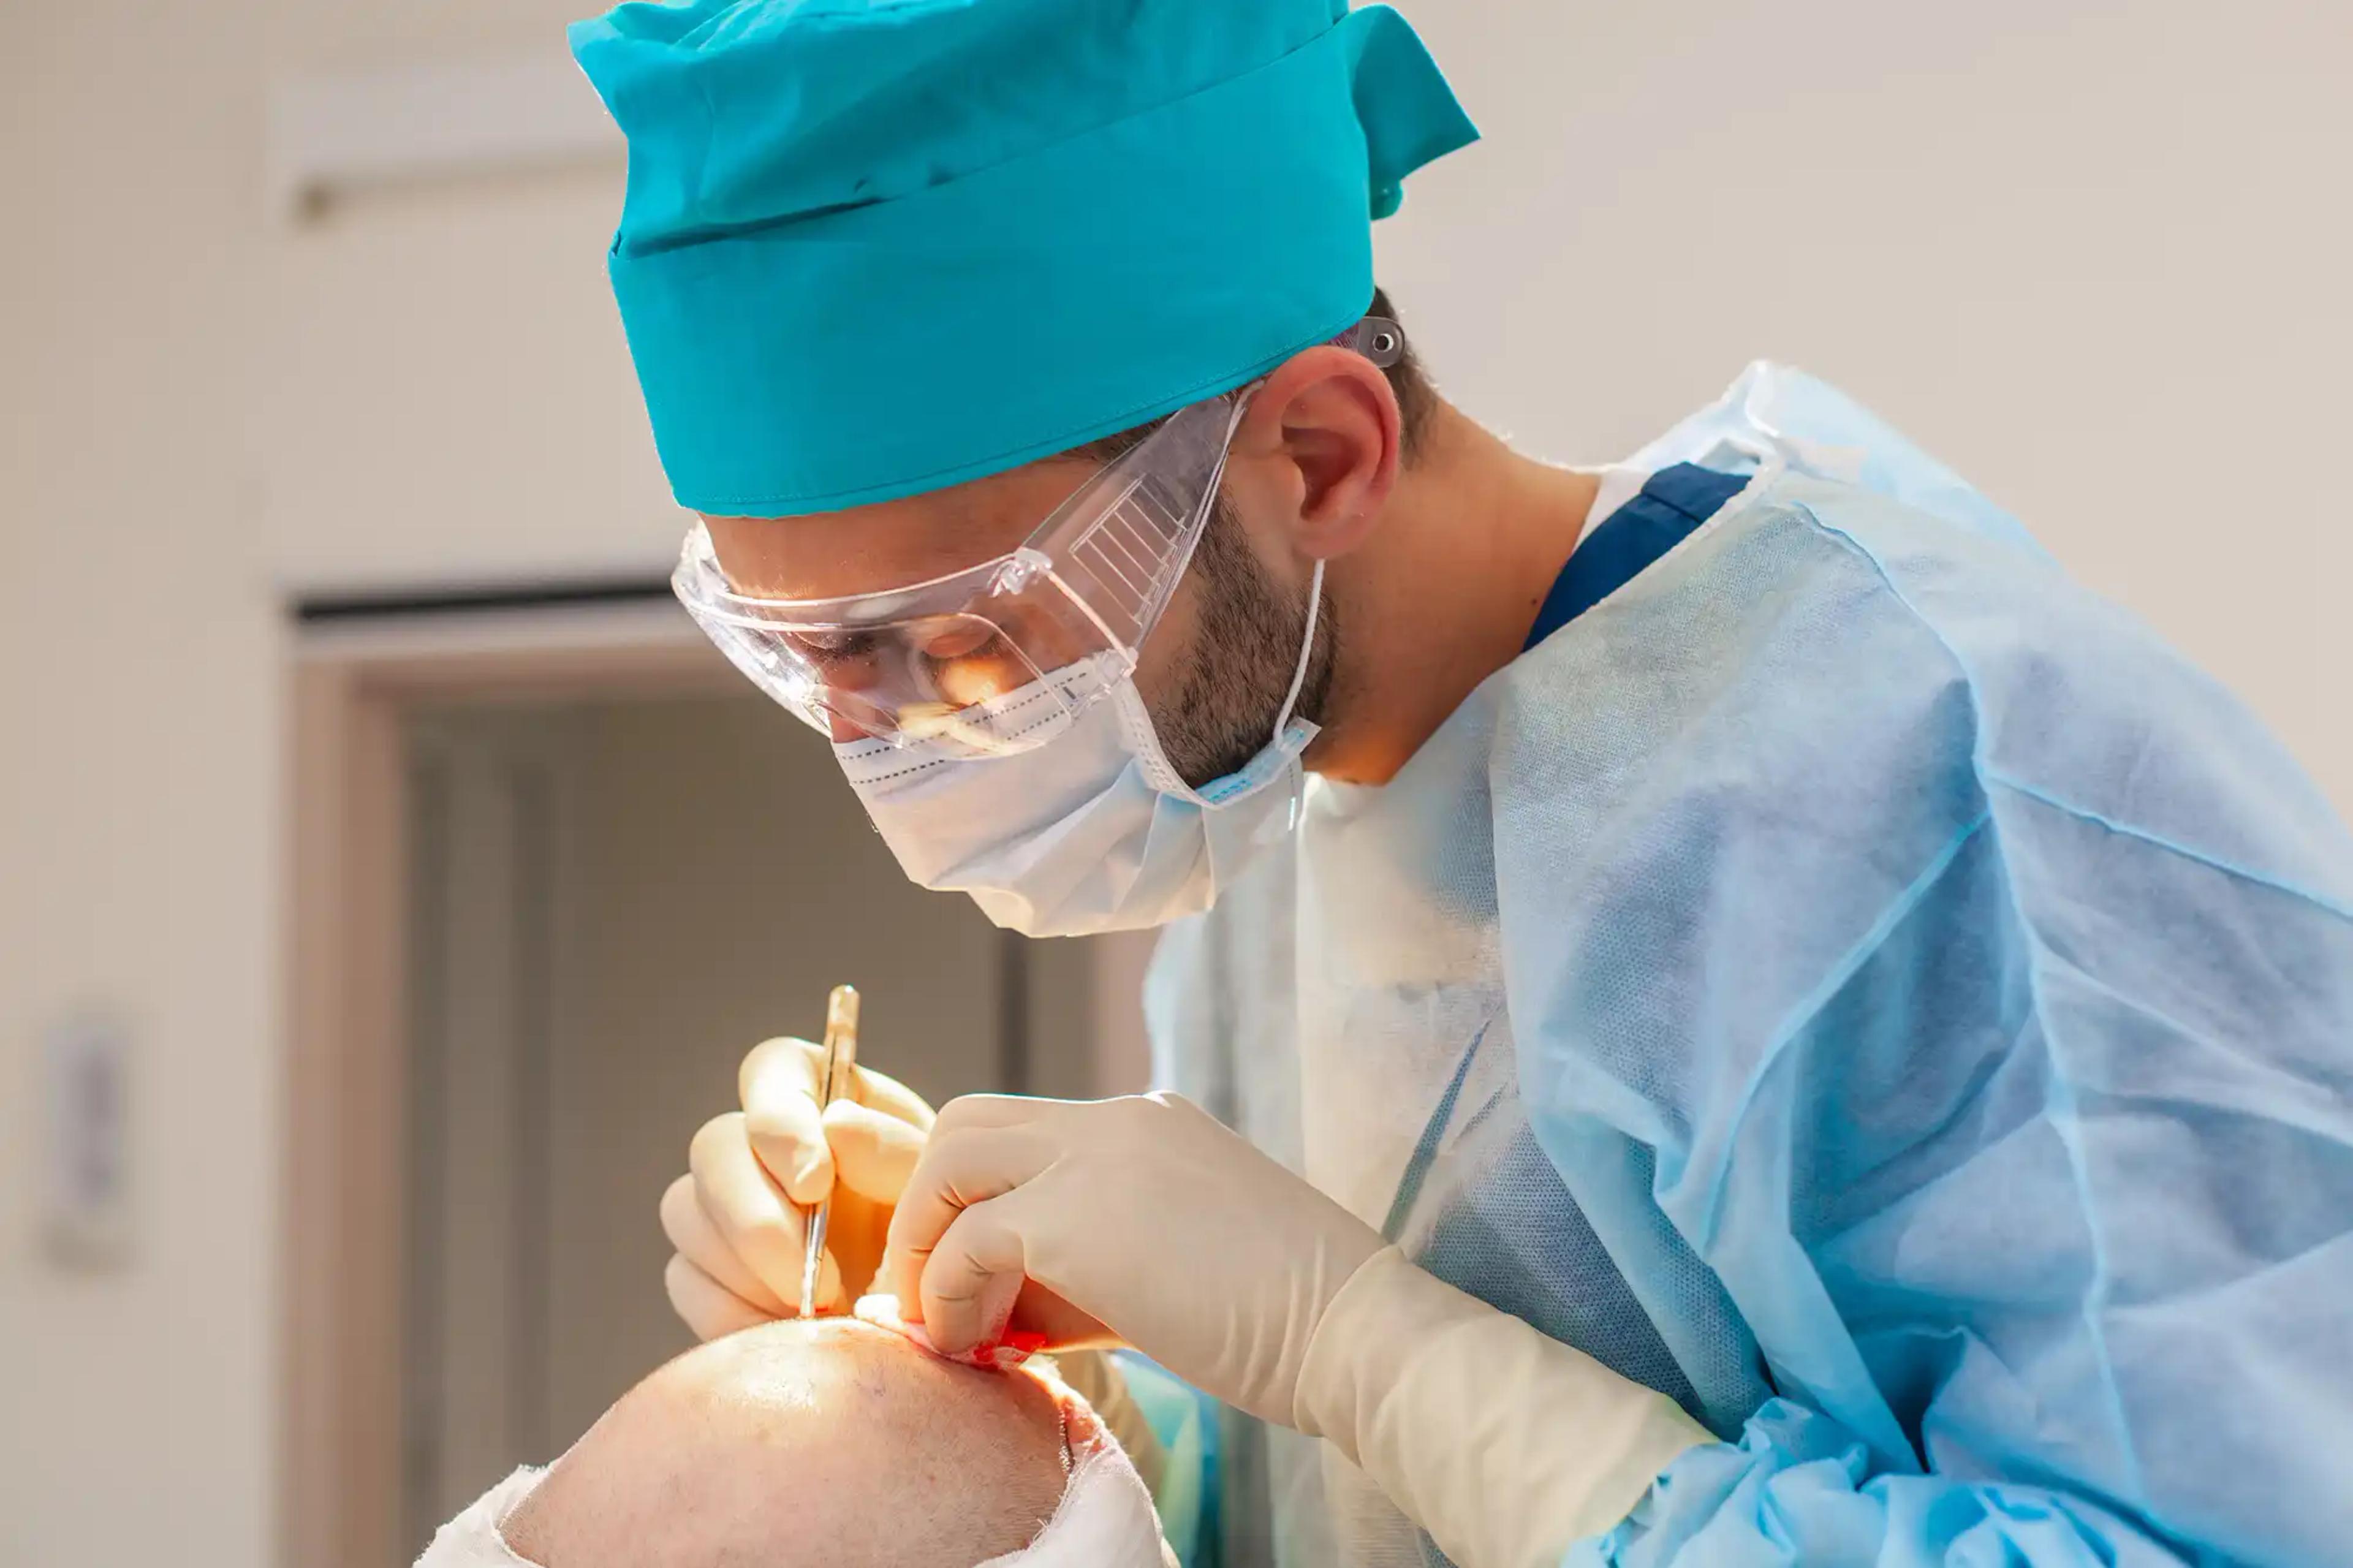 Surgeon performing procedure on patient taking finasteride after hair transplant.